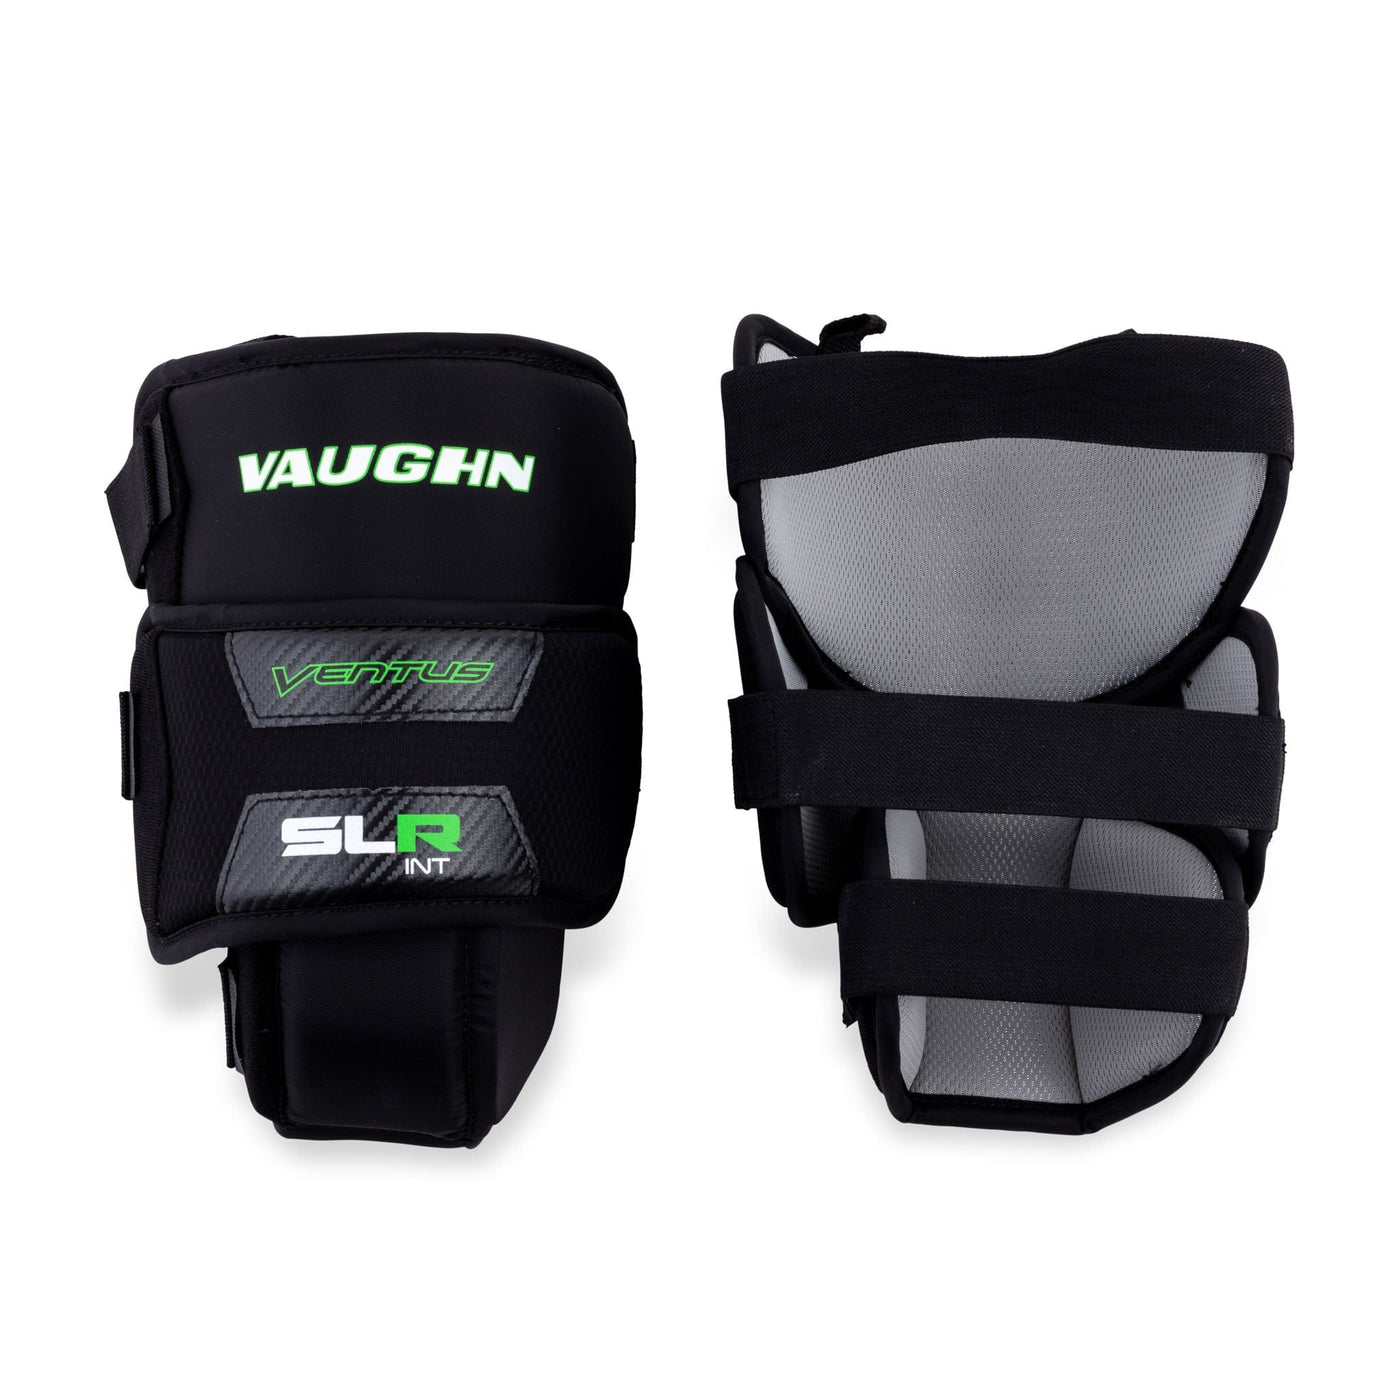 Vaughn Ventus SLR Pro Intermediate Knee Pads